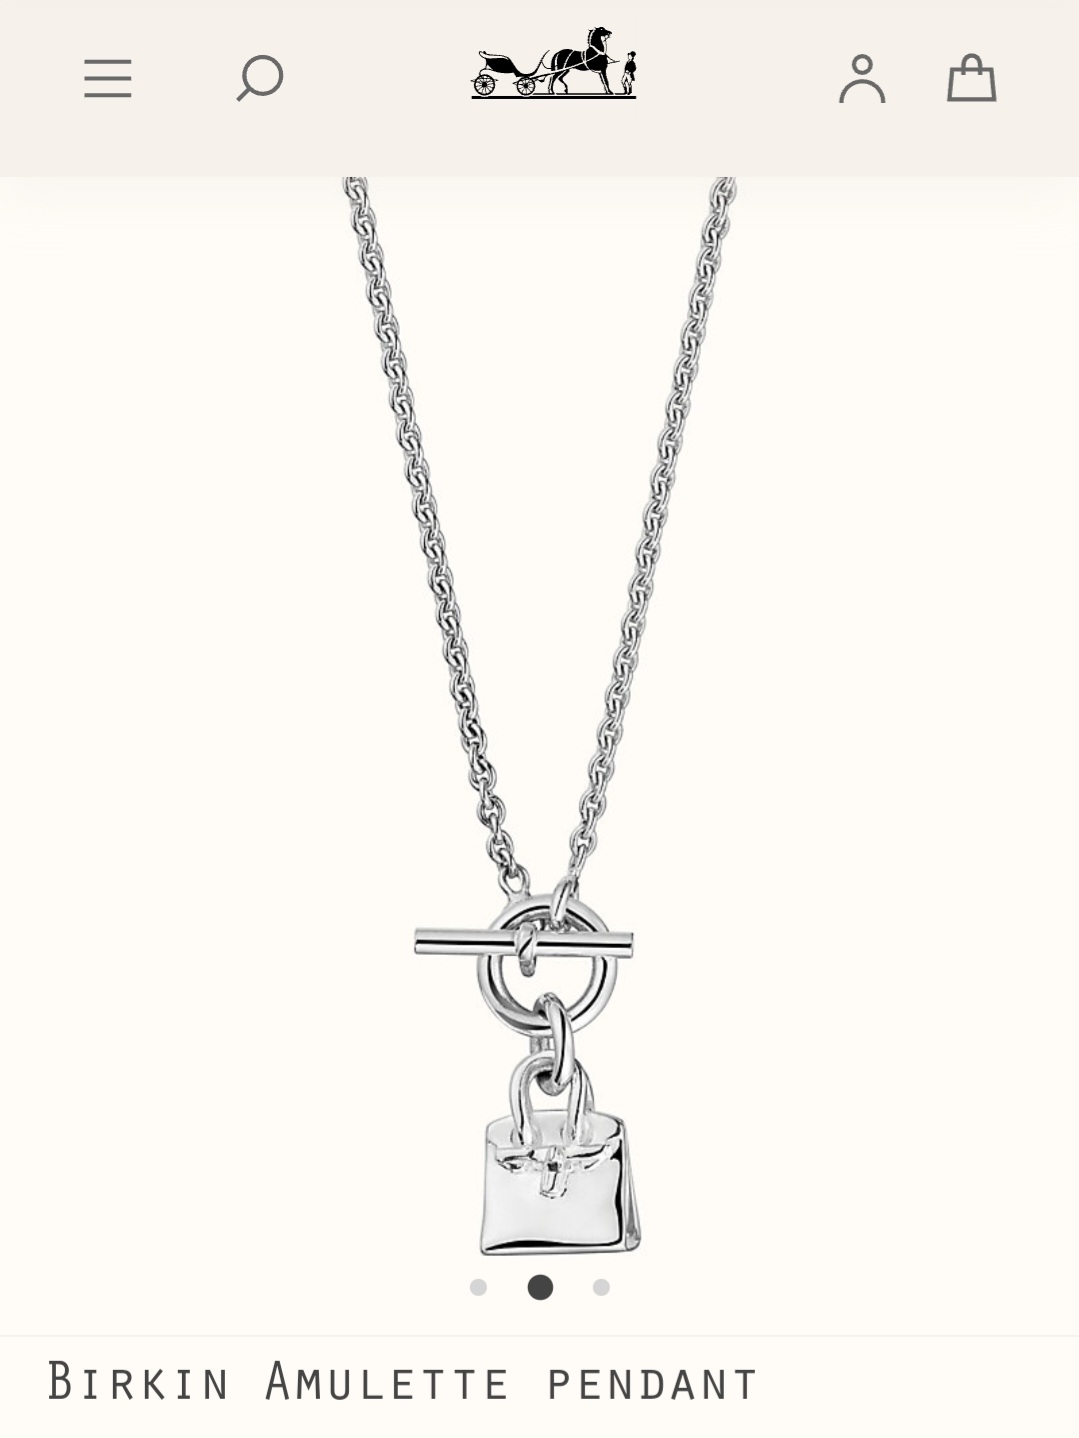 Hermes necklace